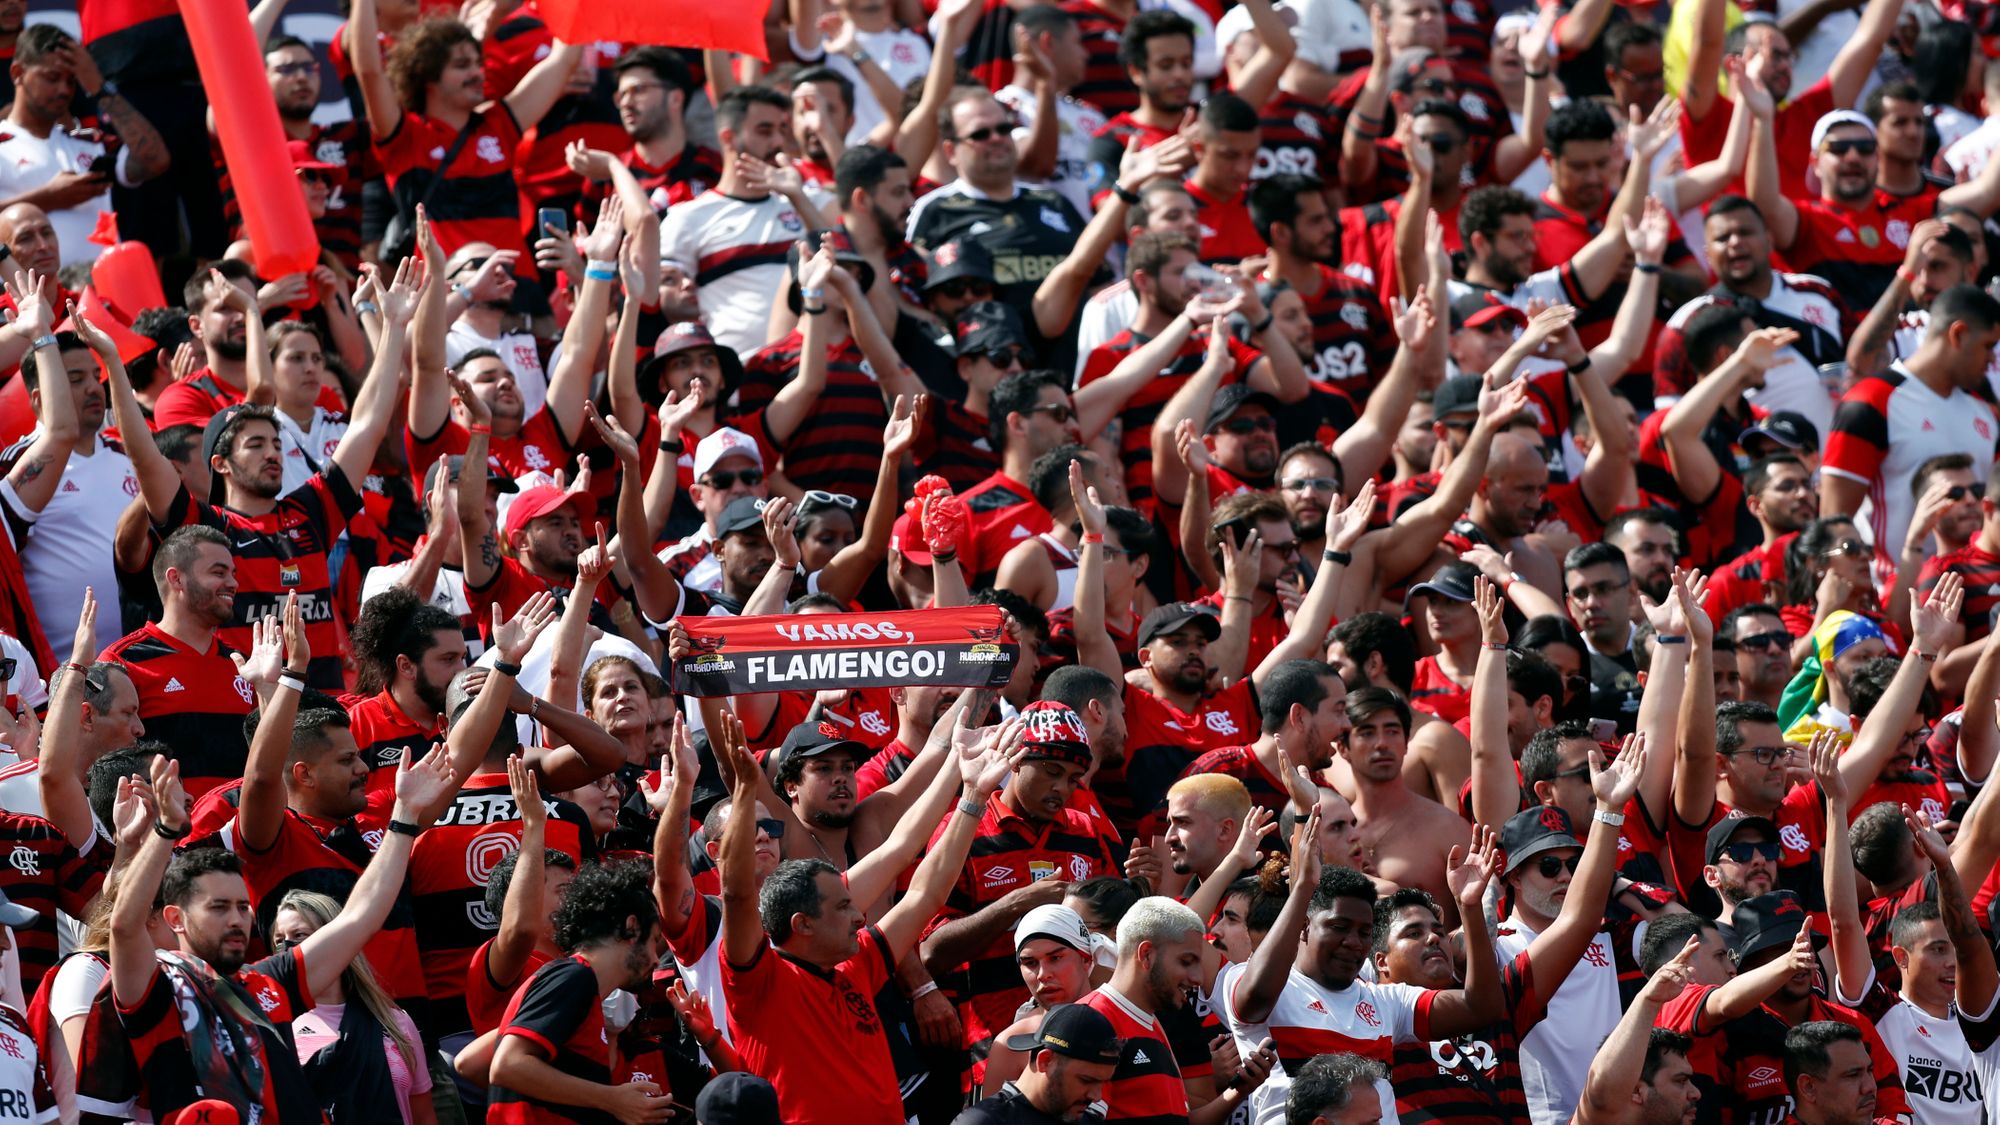 Espectacular duelo de aficiones en la final de la Copa Libertadores